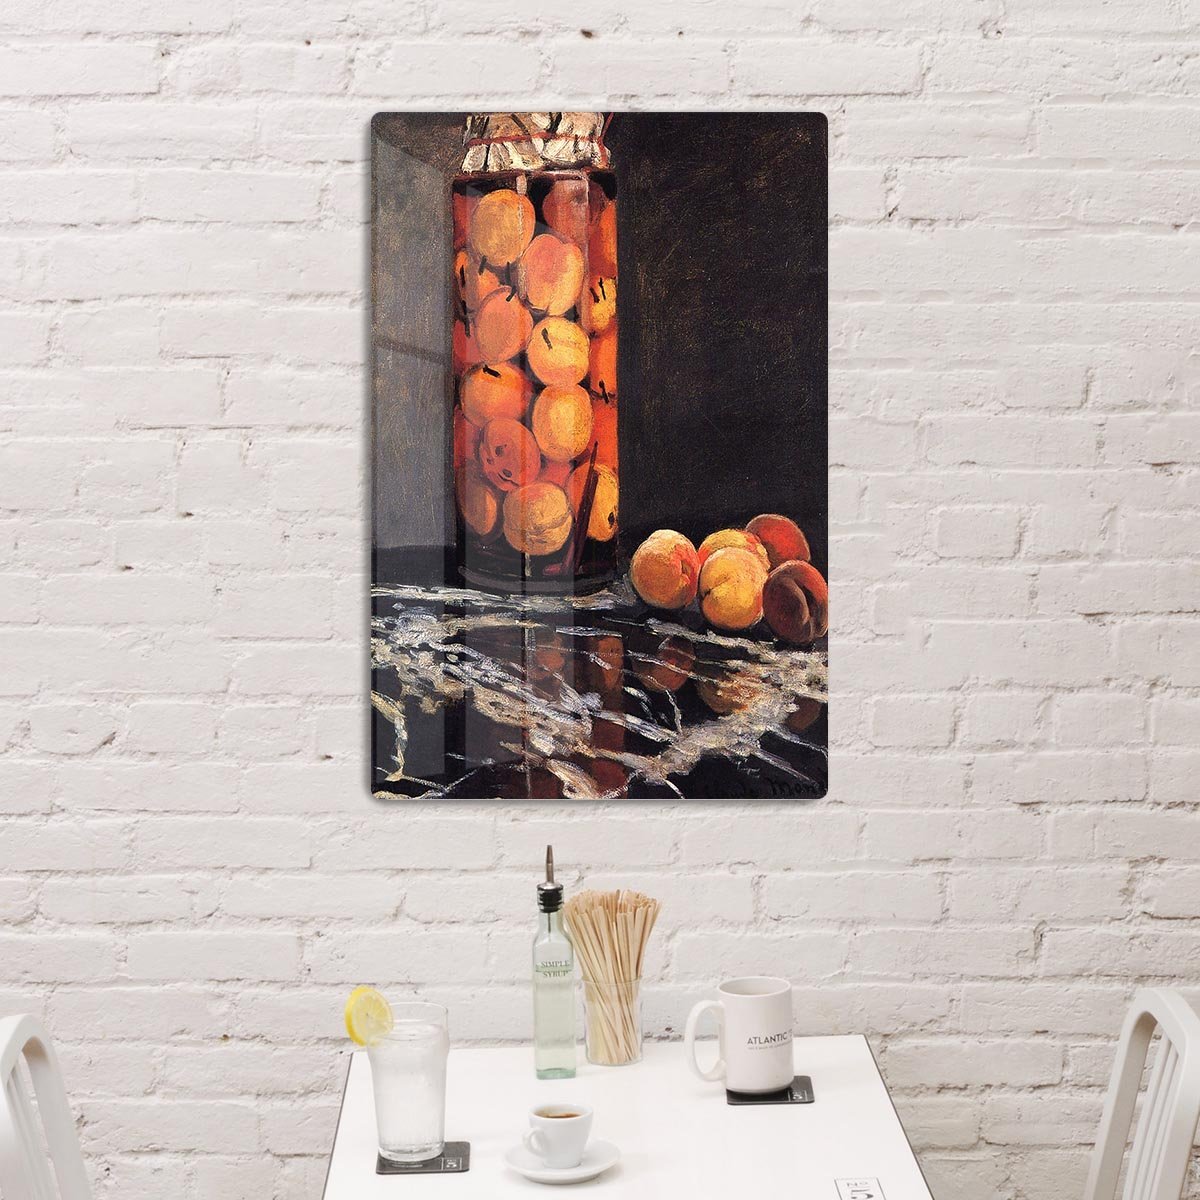 Pot of Peaches by Monet HD Metal Print